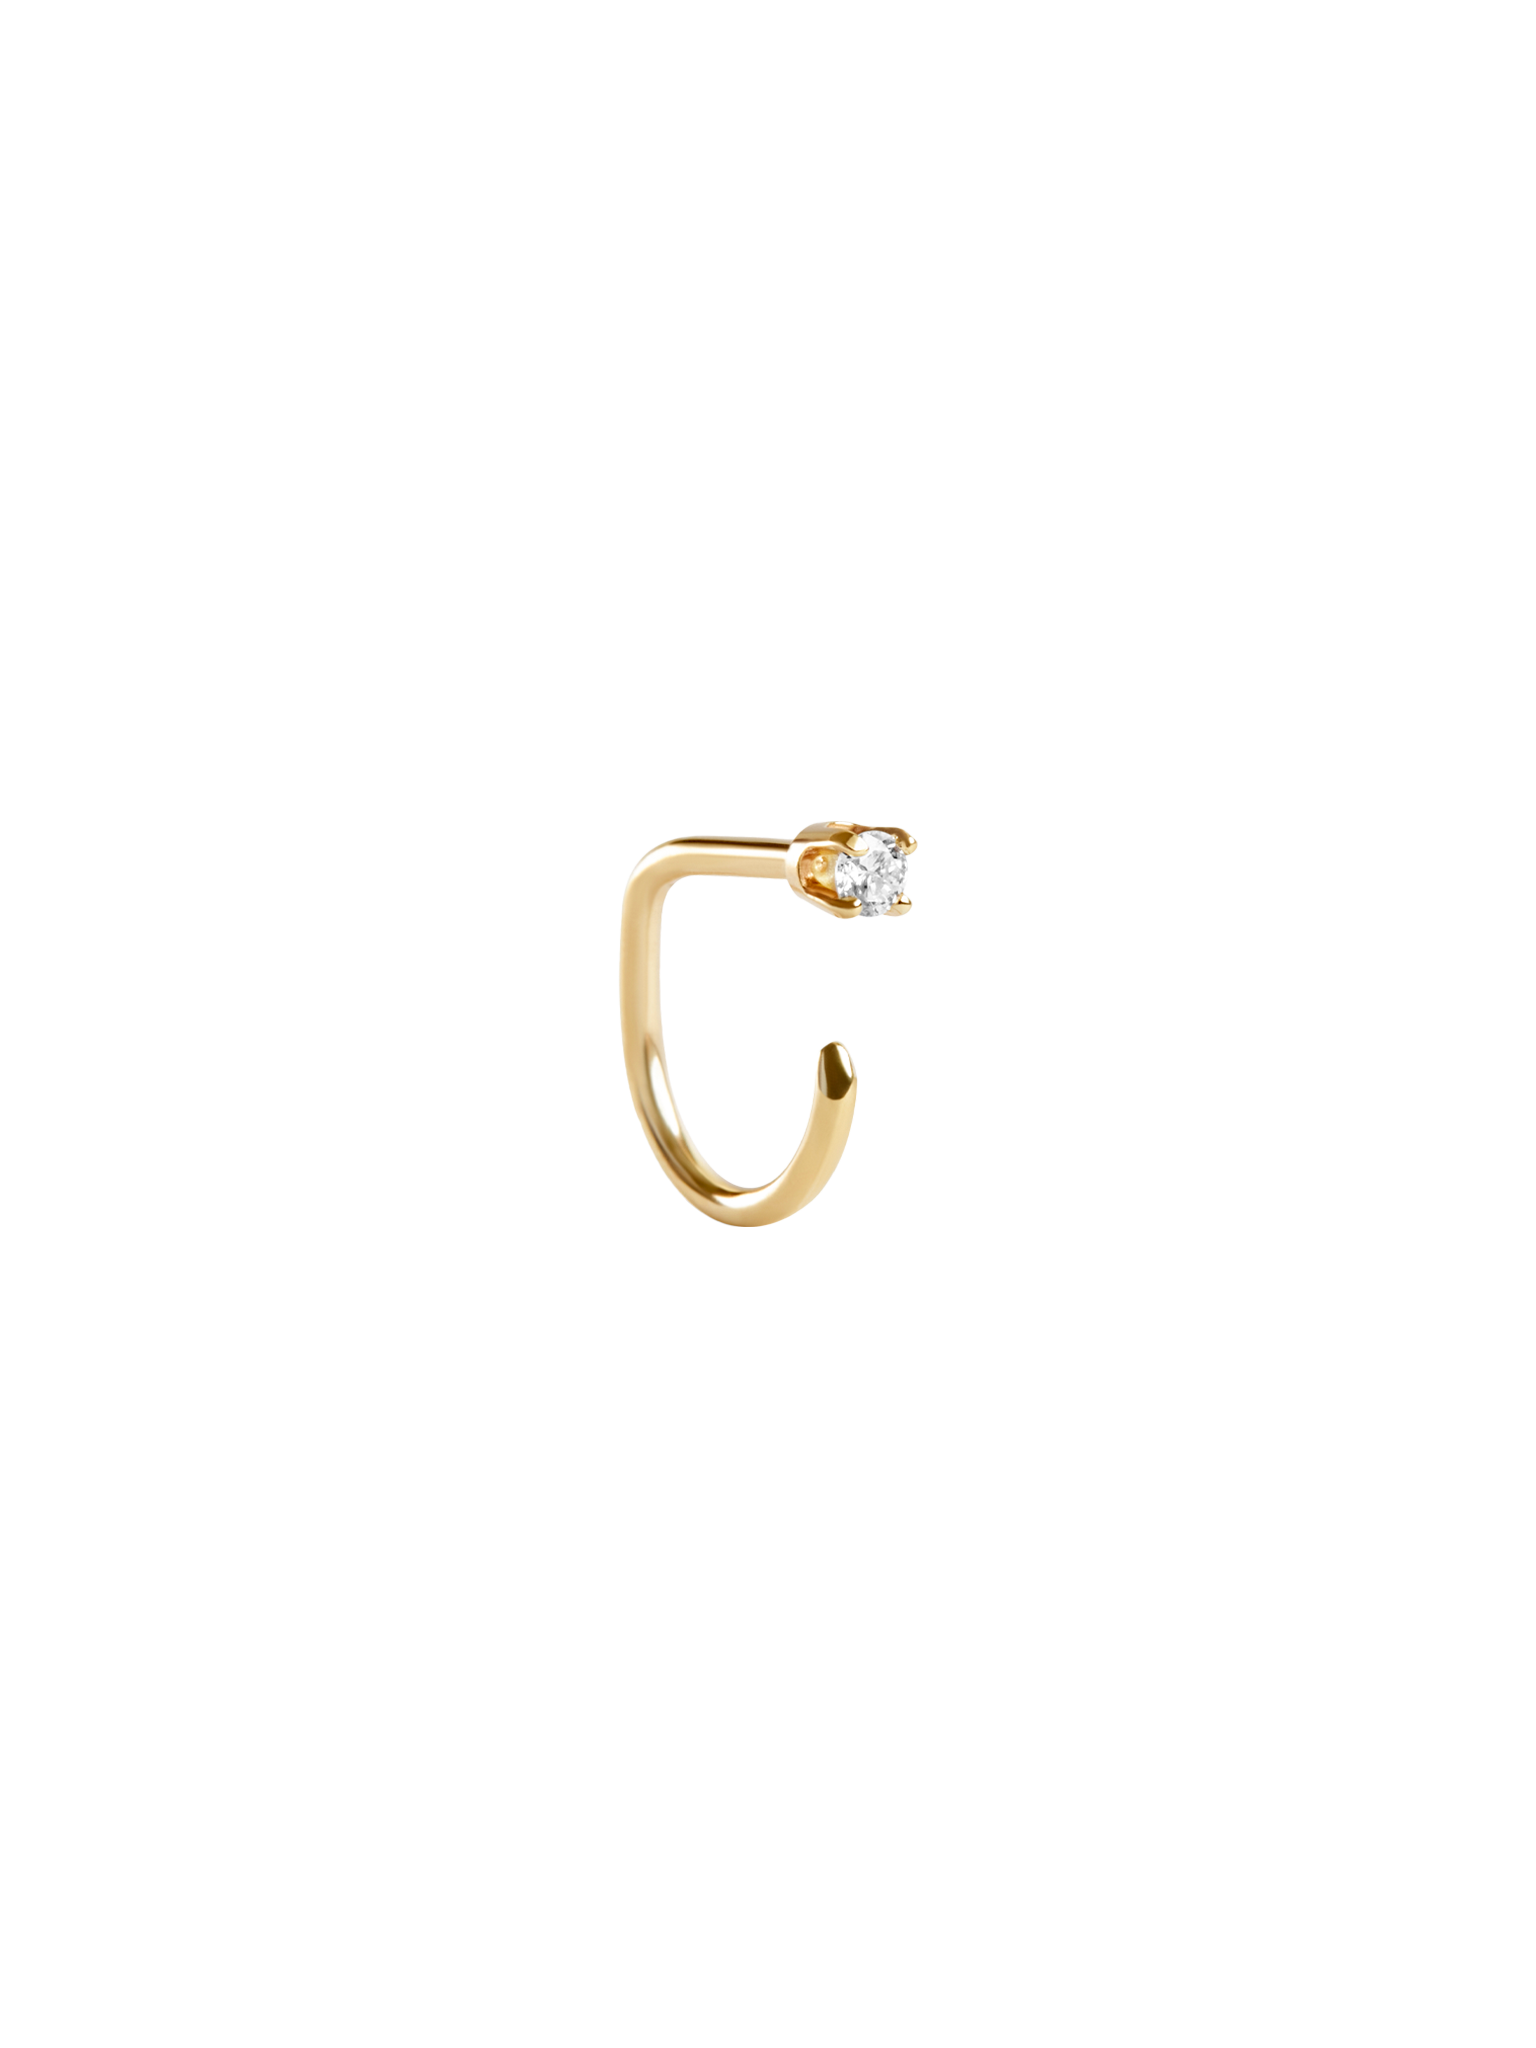 Small diamond claw earring